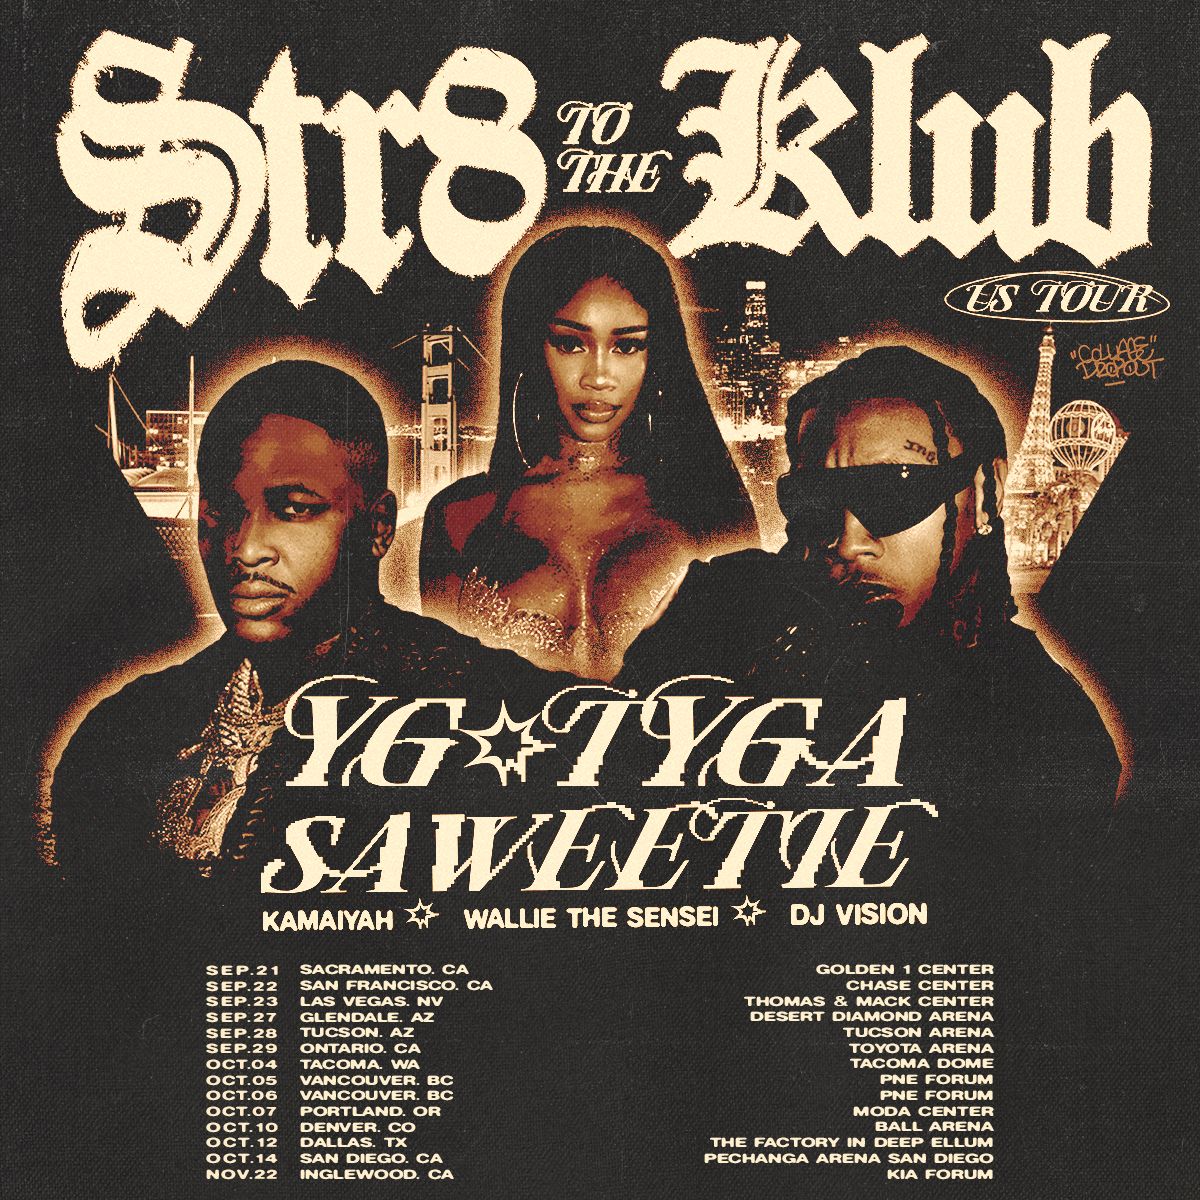 YG, Tyga & Saweetie Announce North American 'Str8 To The Klub' Tour